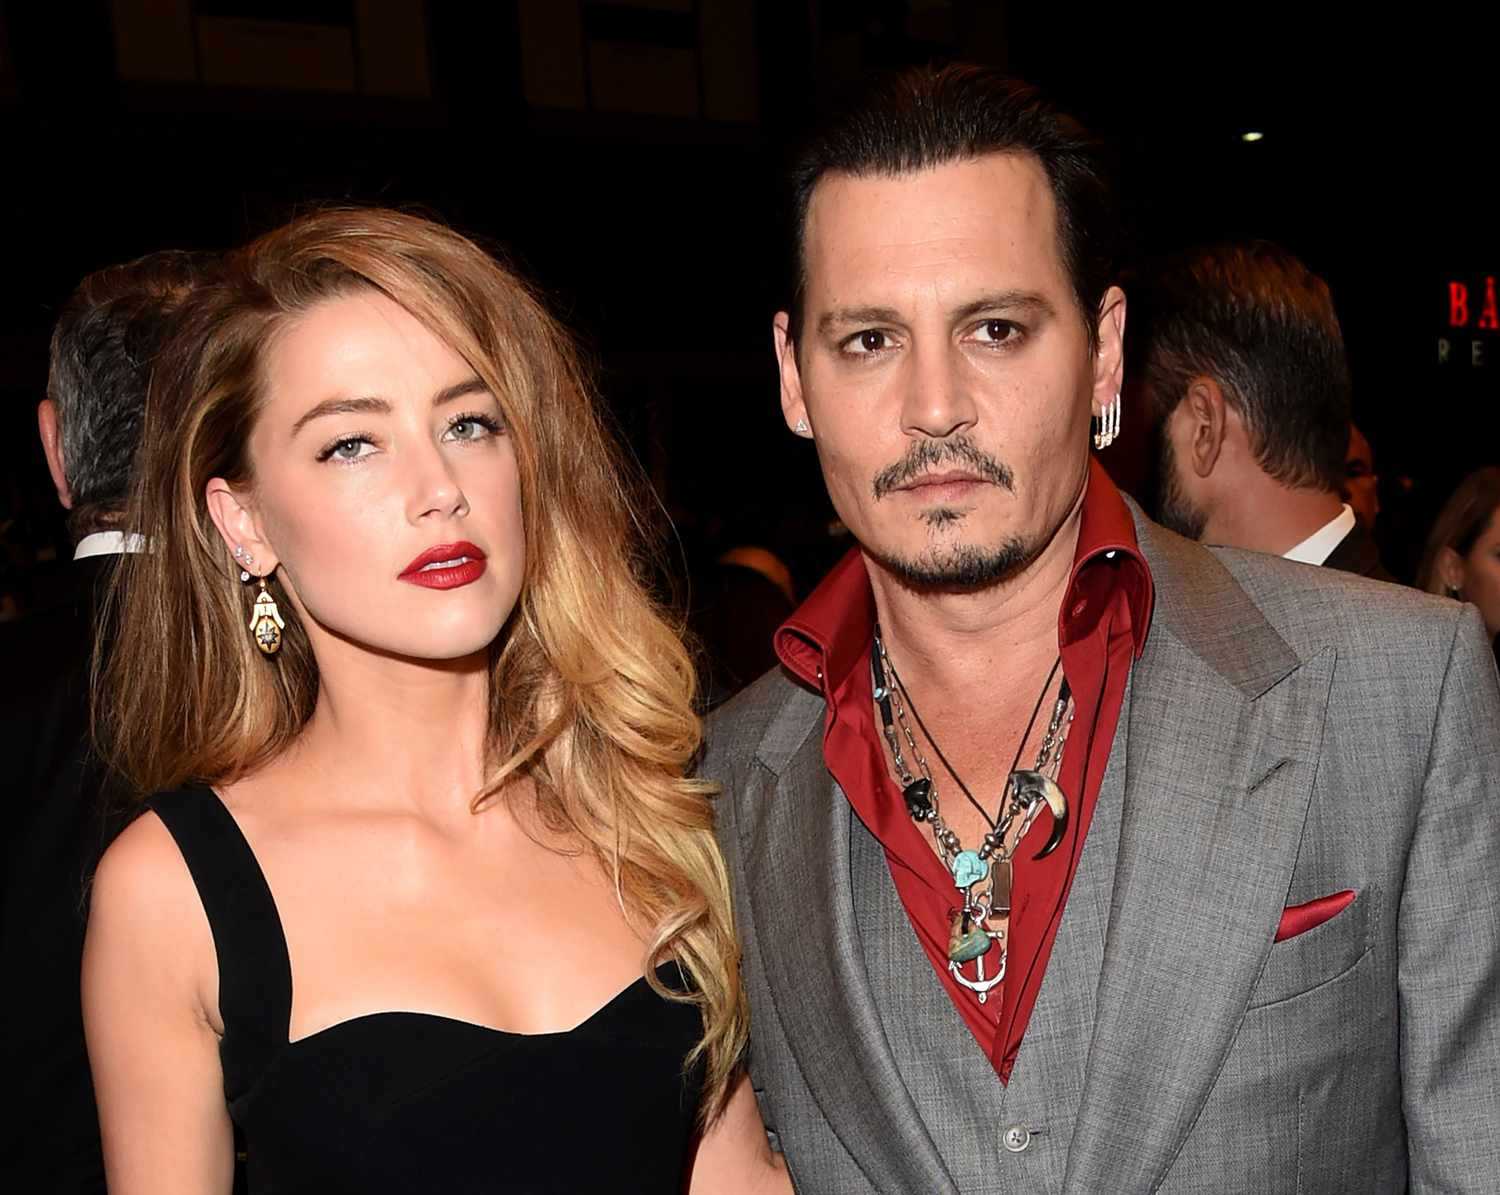 Johnny Depp's triumph: The verdict that restored his name